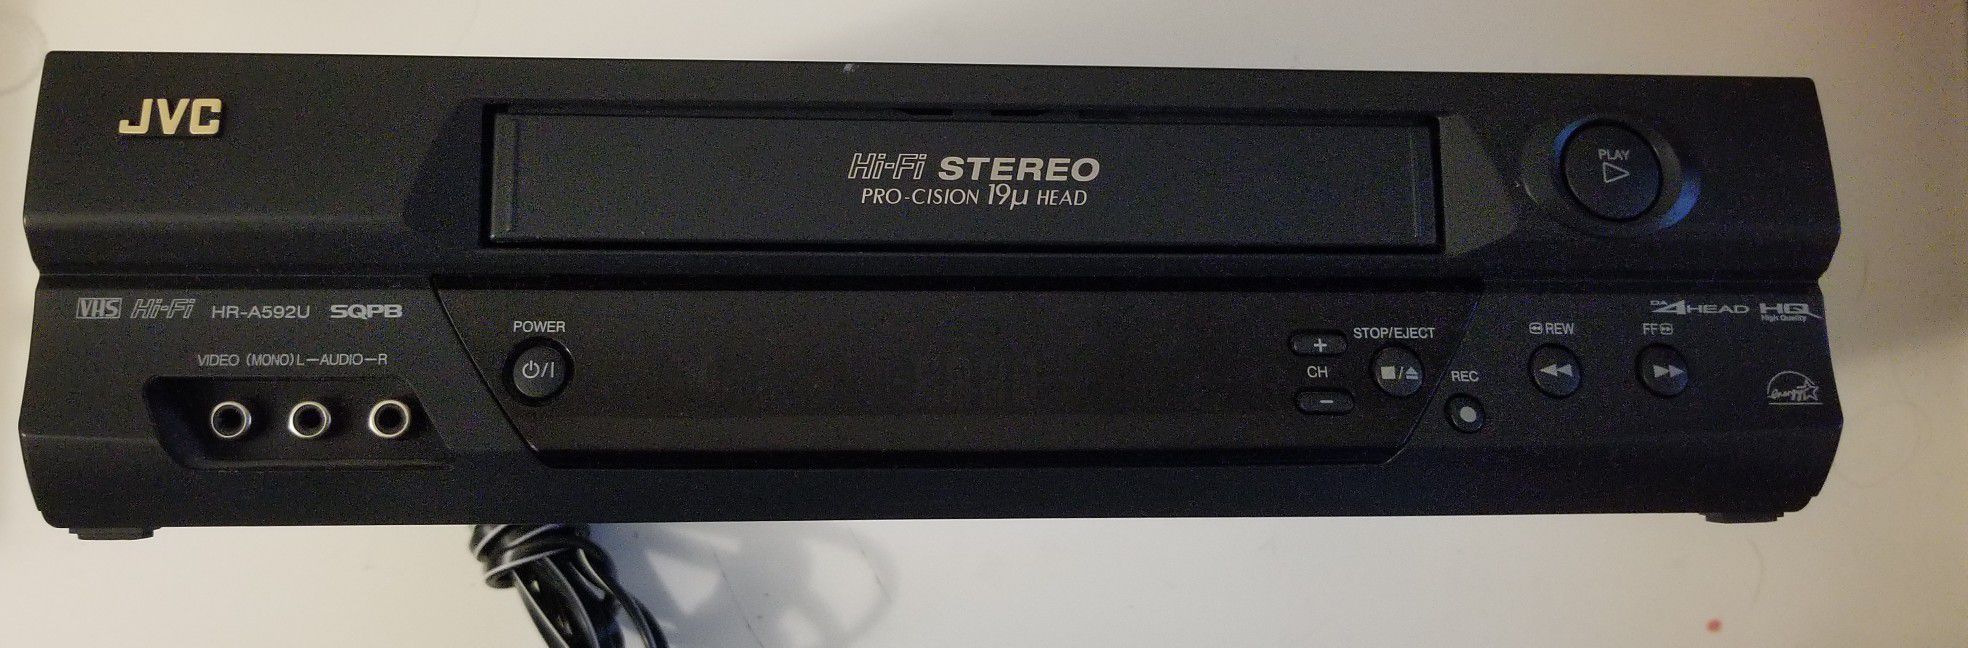 JVC VCR HR-A592U